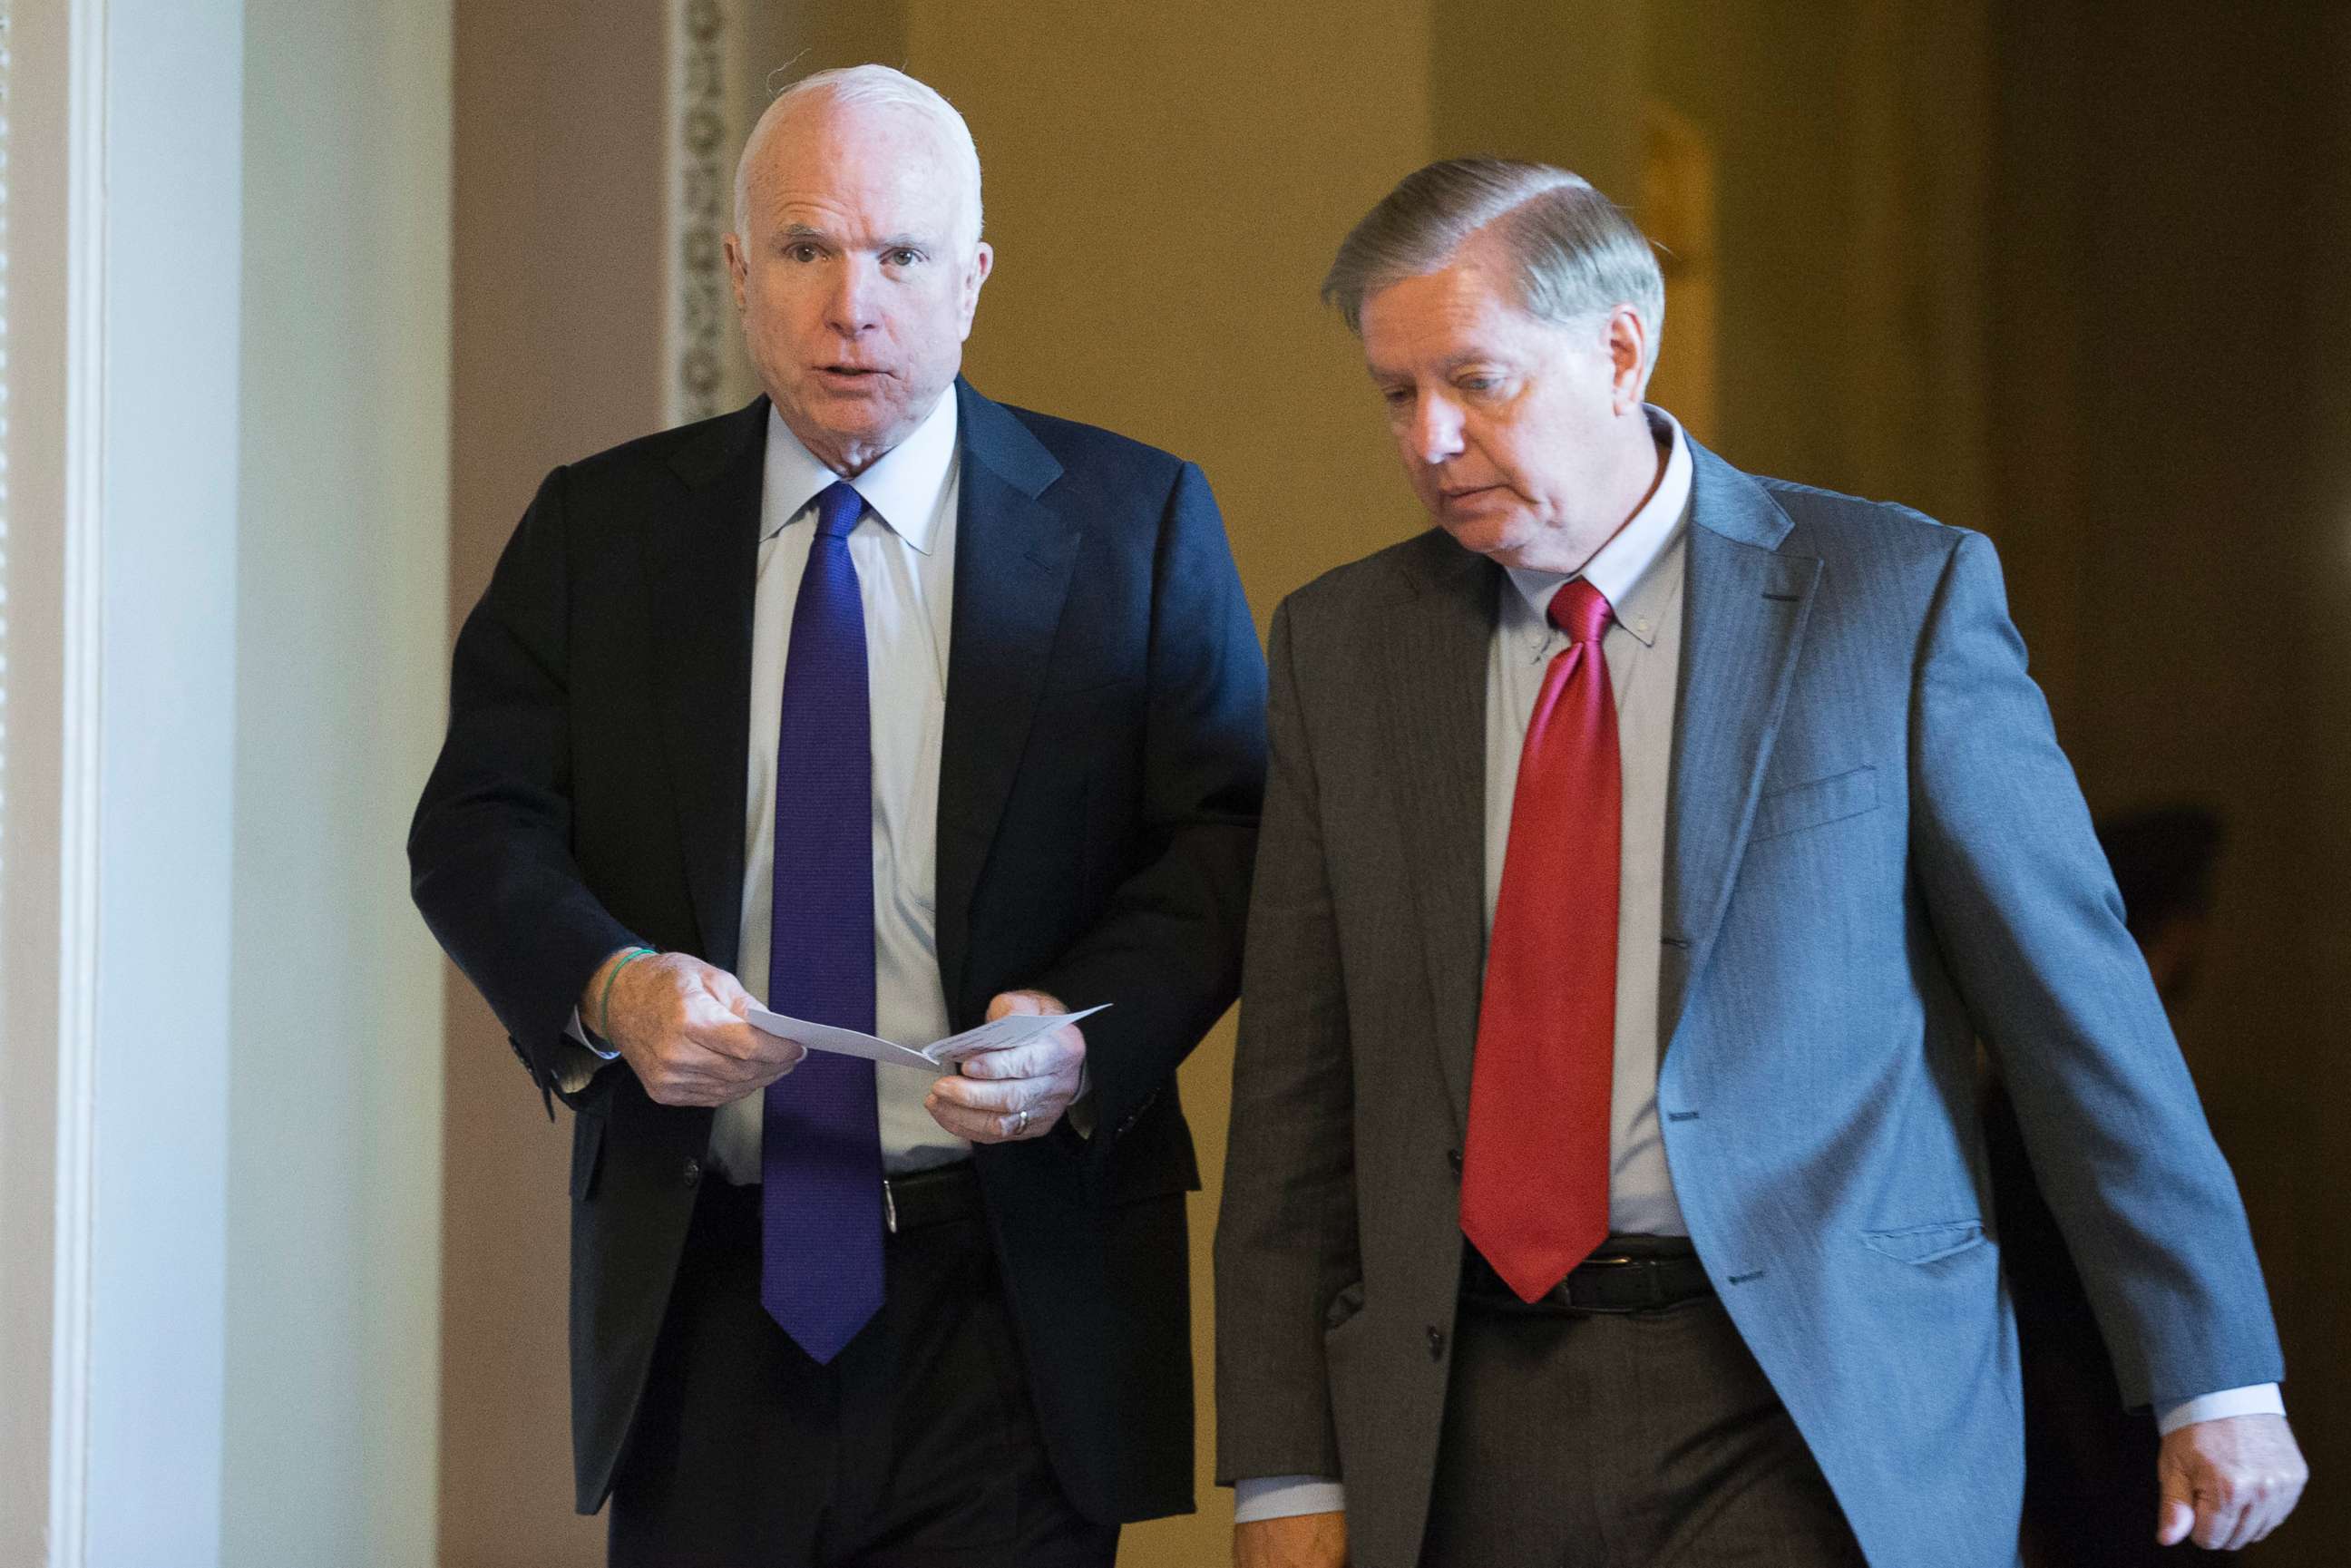 PHOTO: Sen. John McCain and Sen. Lindsey Graham walk near the Senate chamber following Senate Republican elections on Capitol Hill in Washington, in this file photo dated Nov. 16, 2016.